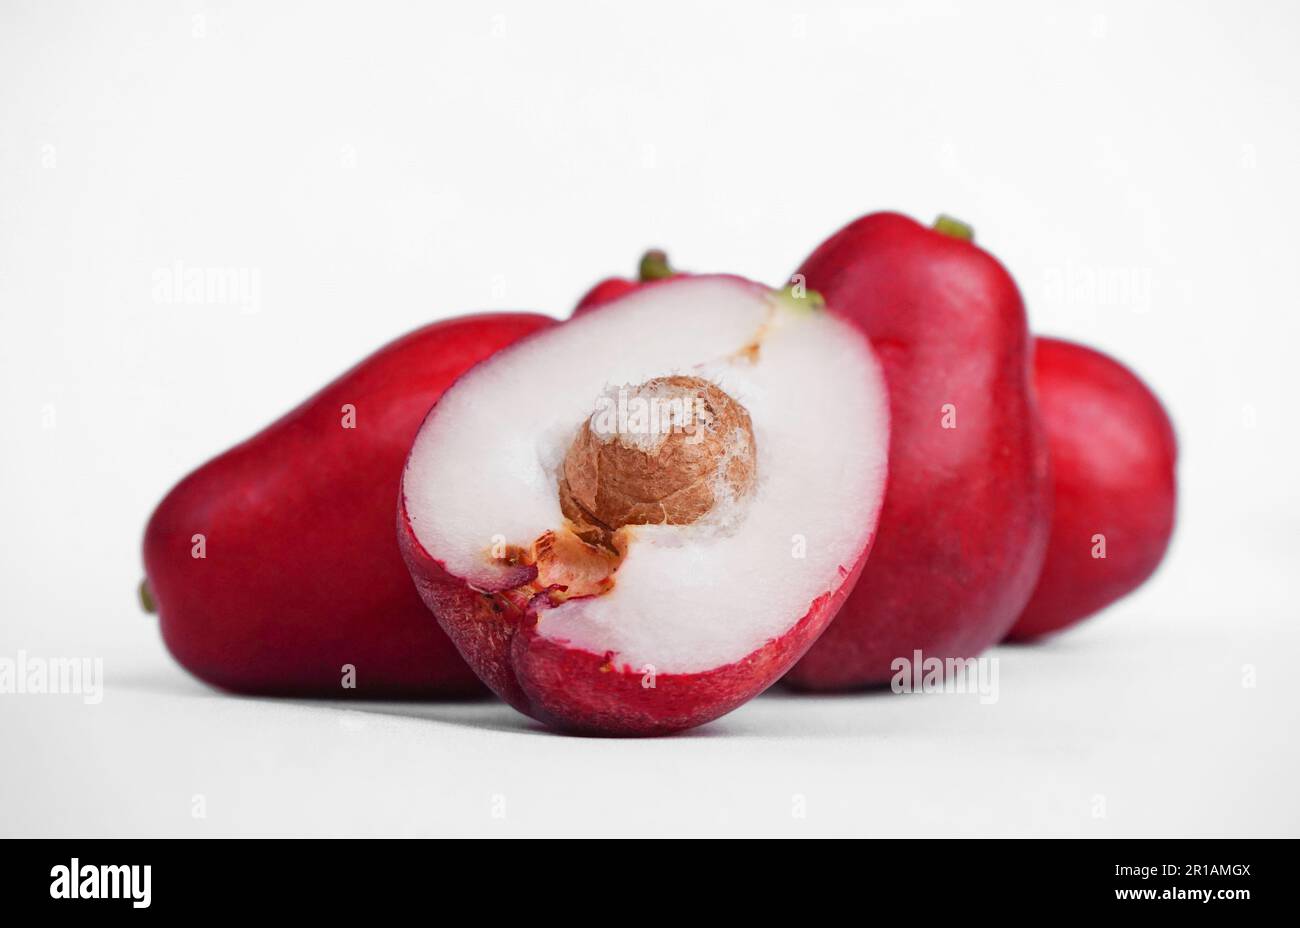 Rose apples isolated on white background Stock Photo